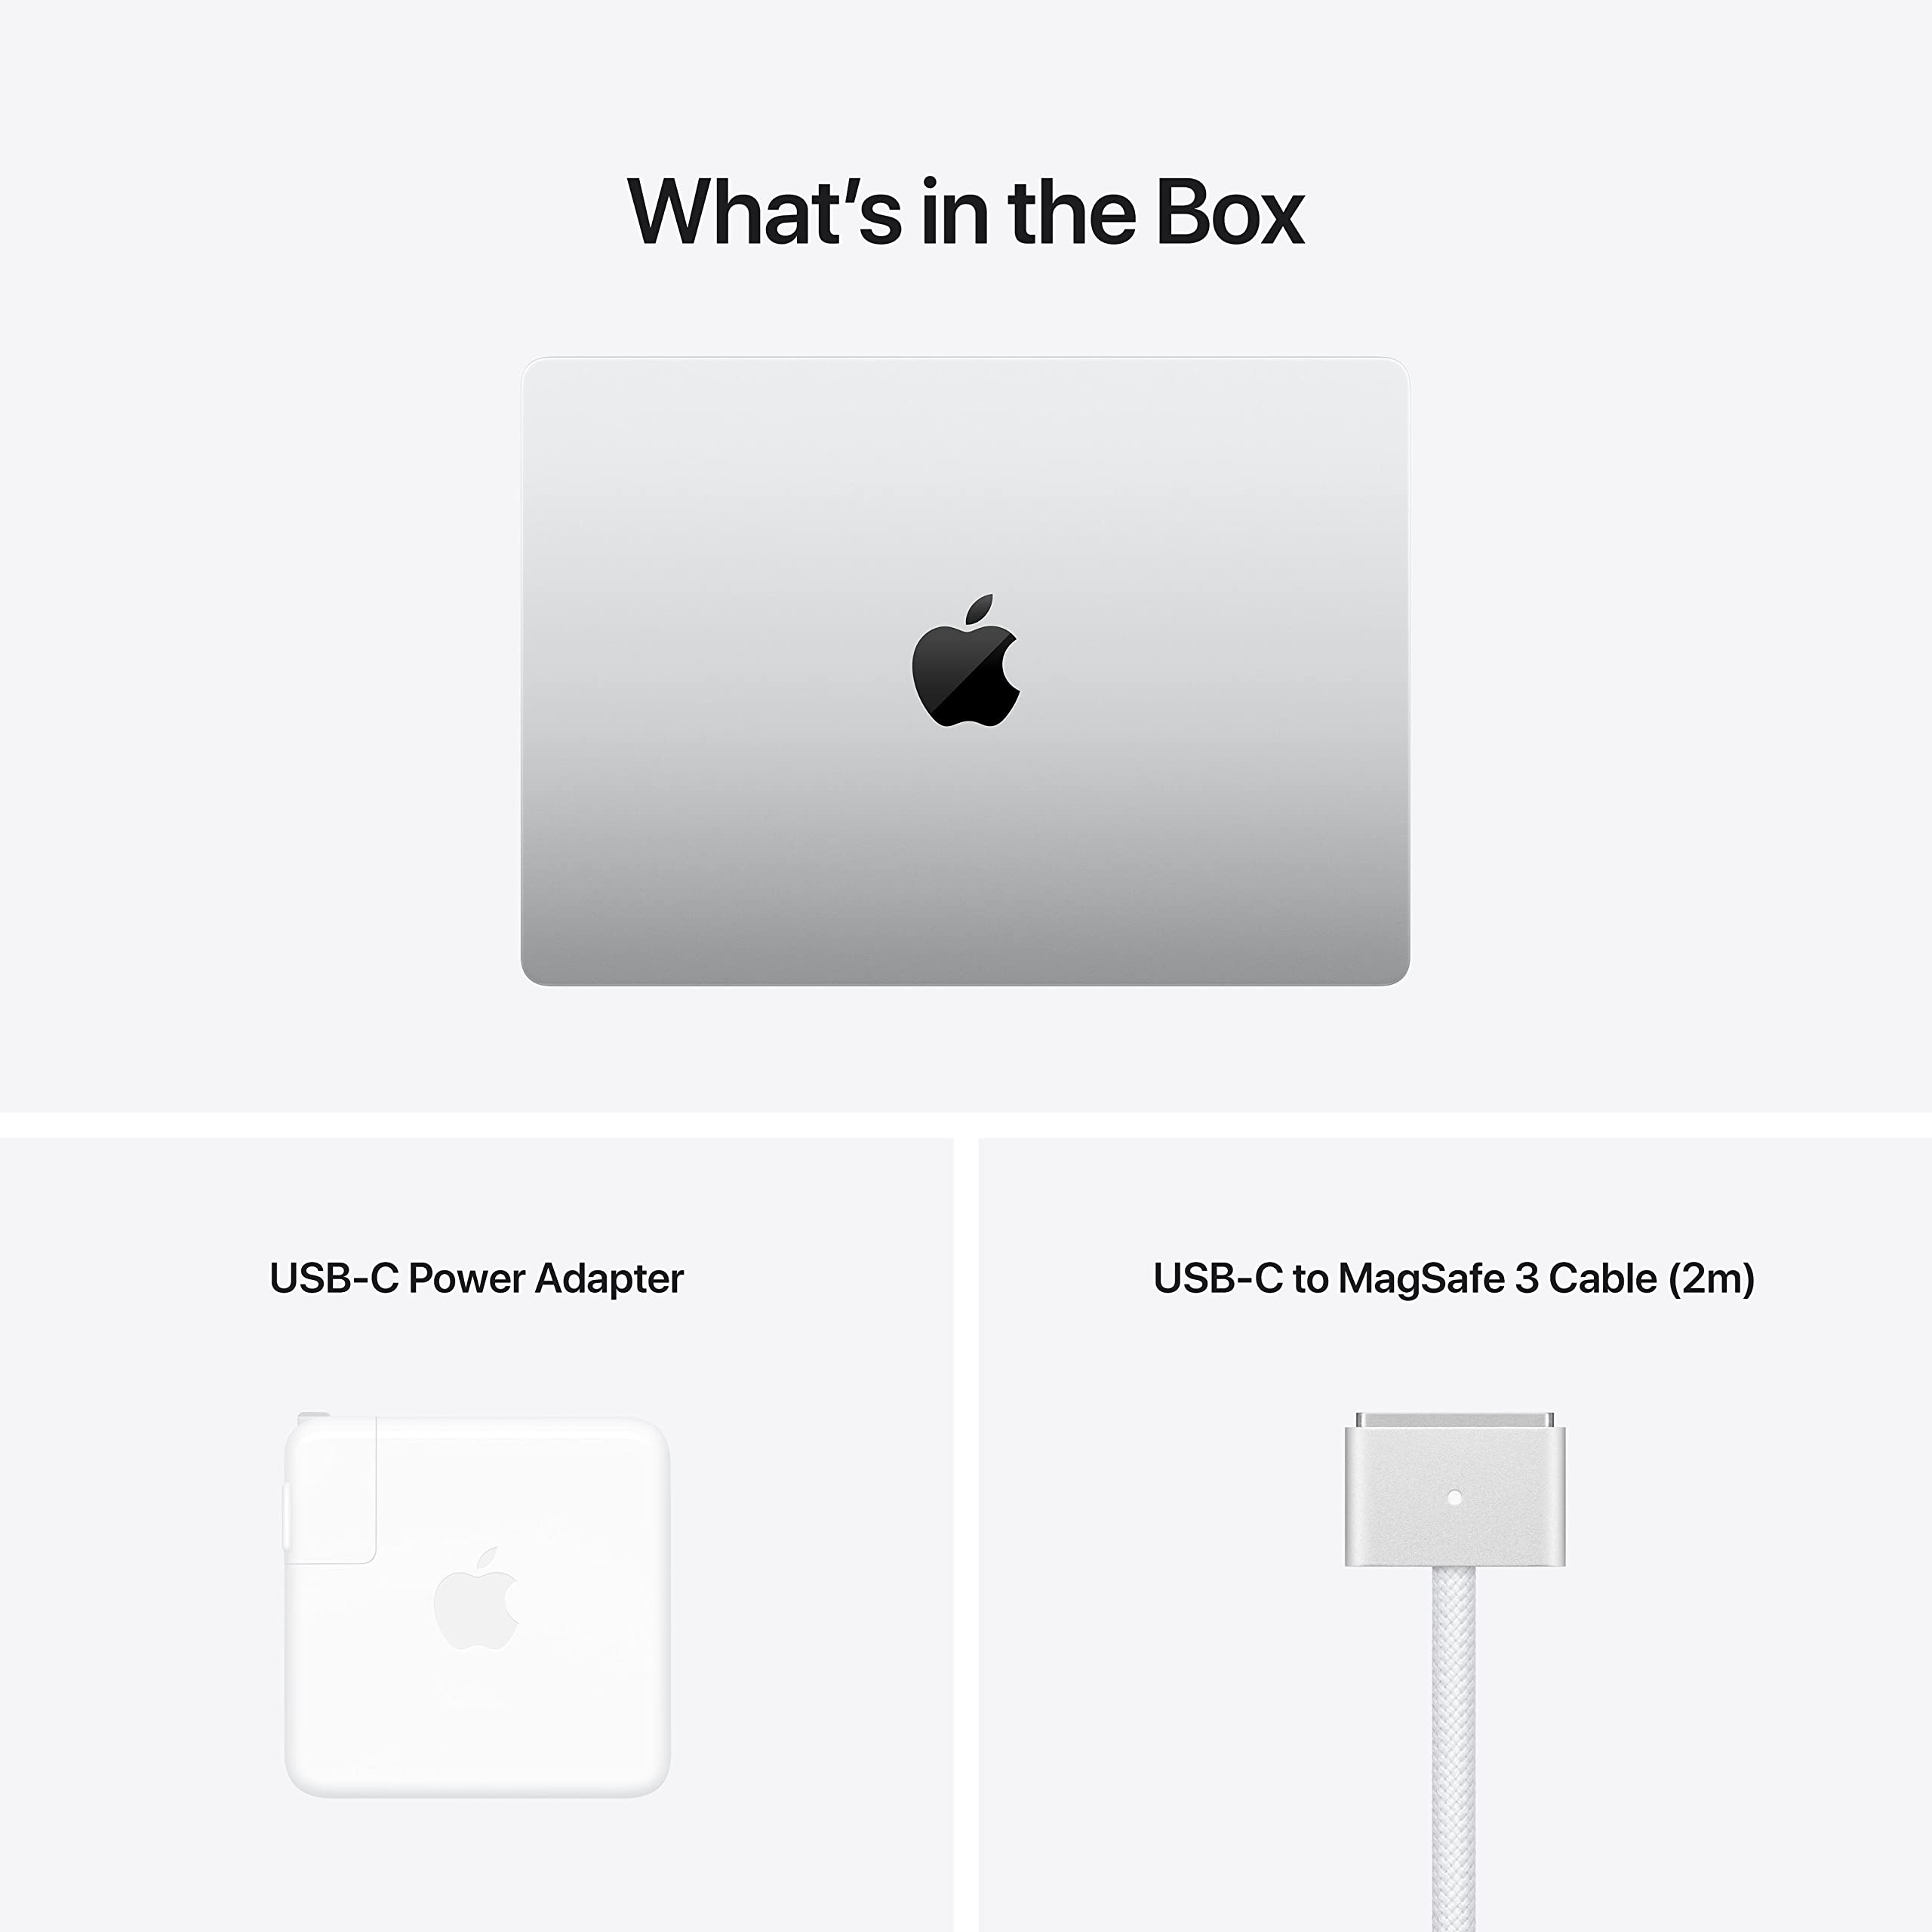 2021 Apple MacBook Pro (14-inch, Apple M1 Pro chip with 8‑core CPU and 14‑core GPU, 16GB RAM, 512GB SSD) - Silver